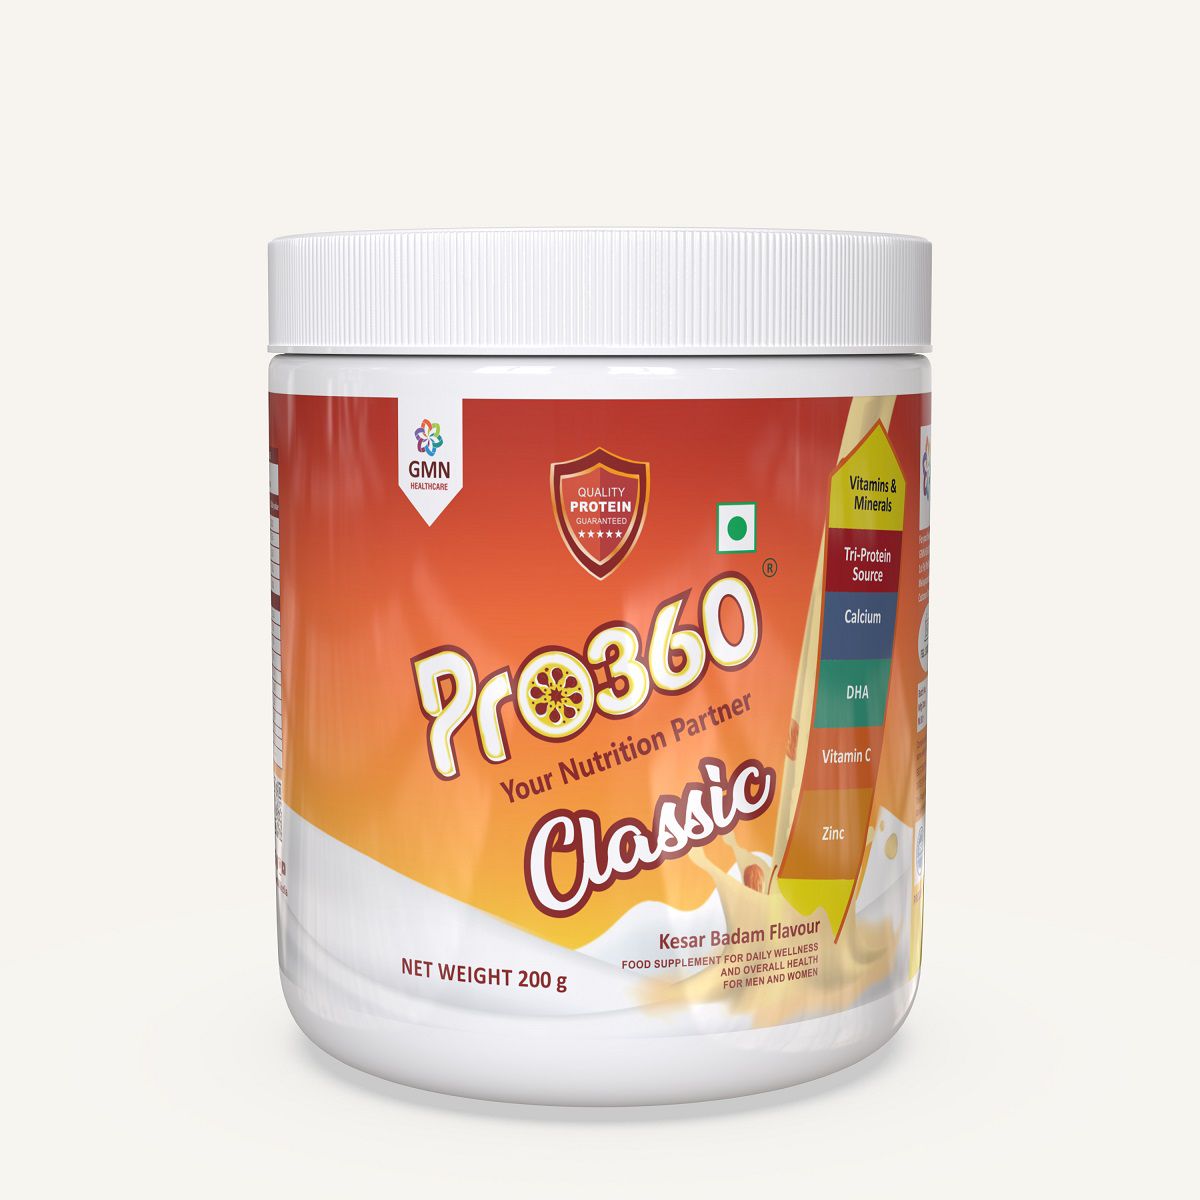     			PRO360 Classic Protein Kesar Badam Nutrition Drink Powder 200 gm